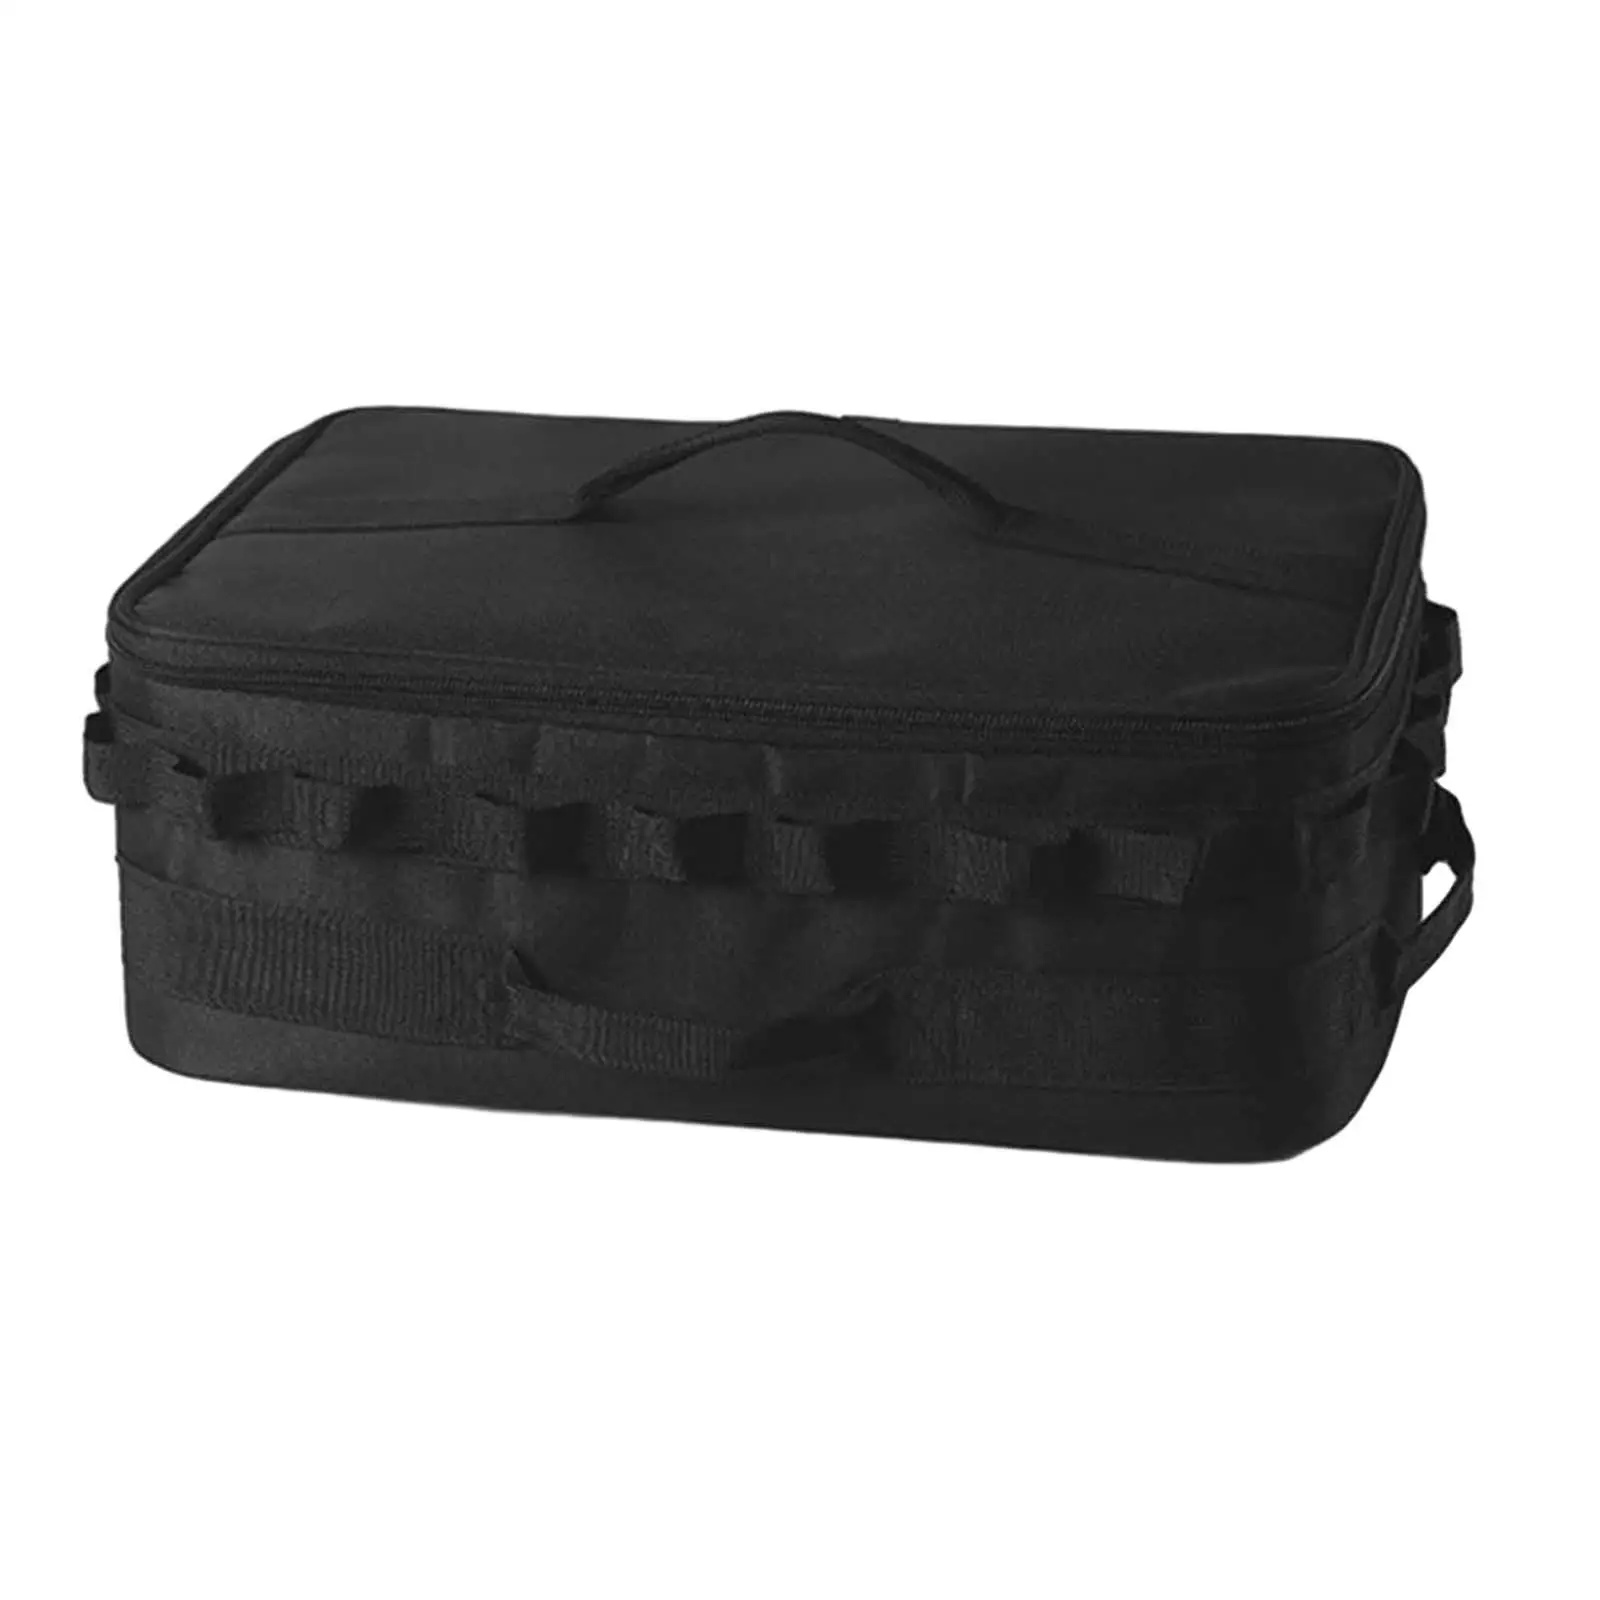 Gas Tank Storage Bag Handbag Large Capacity Organizer with Mesh Pocket Grill Carrying Bag for Hiking Party BBQ Travel Trip